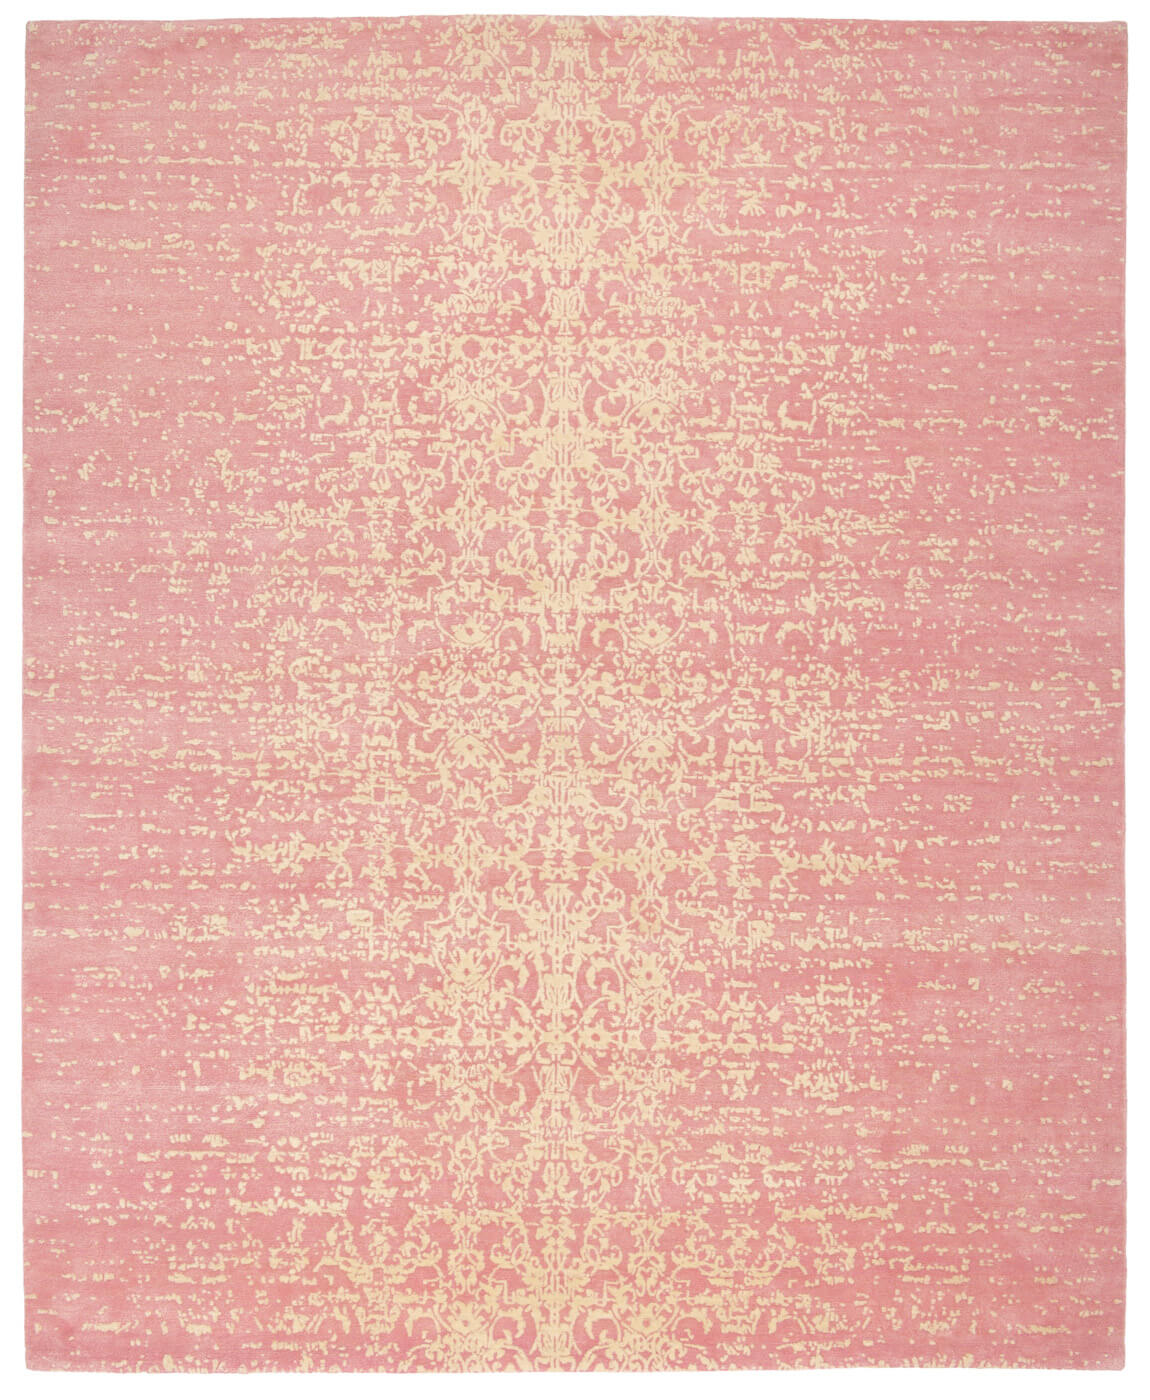 Faded Hand-woven Pink Luxury Rug